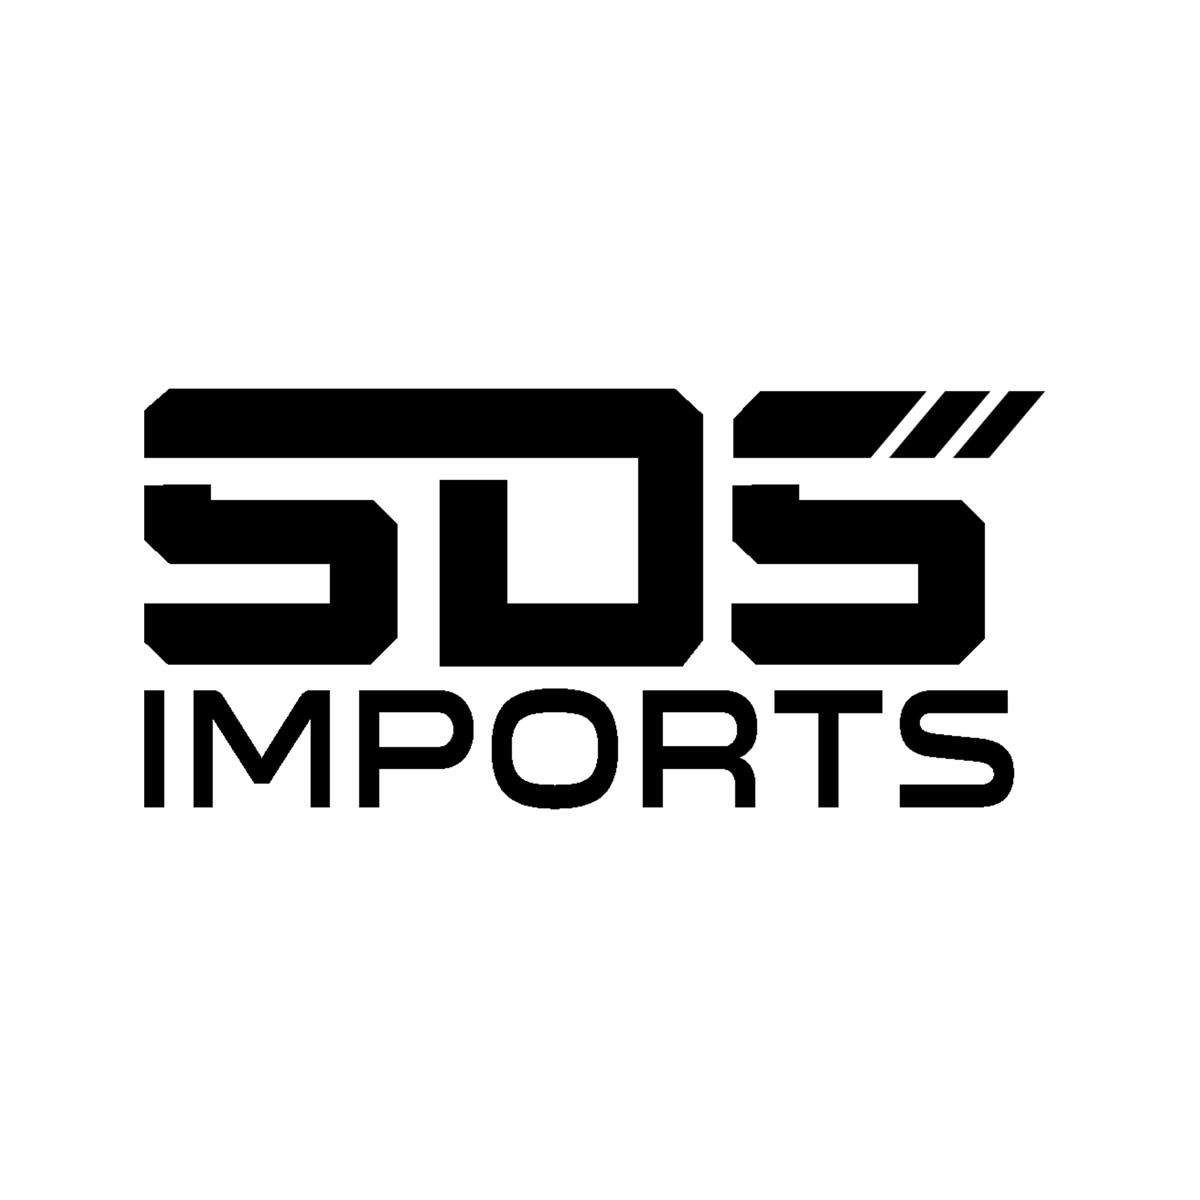 SDS Imports